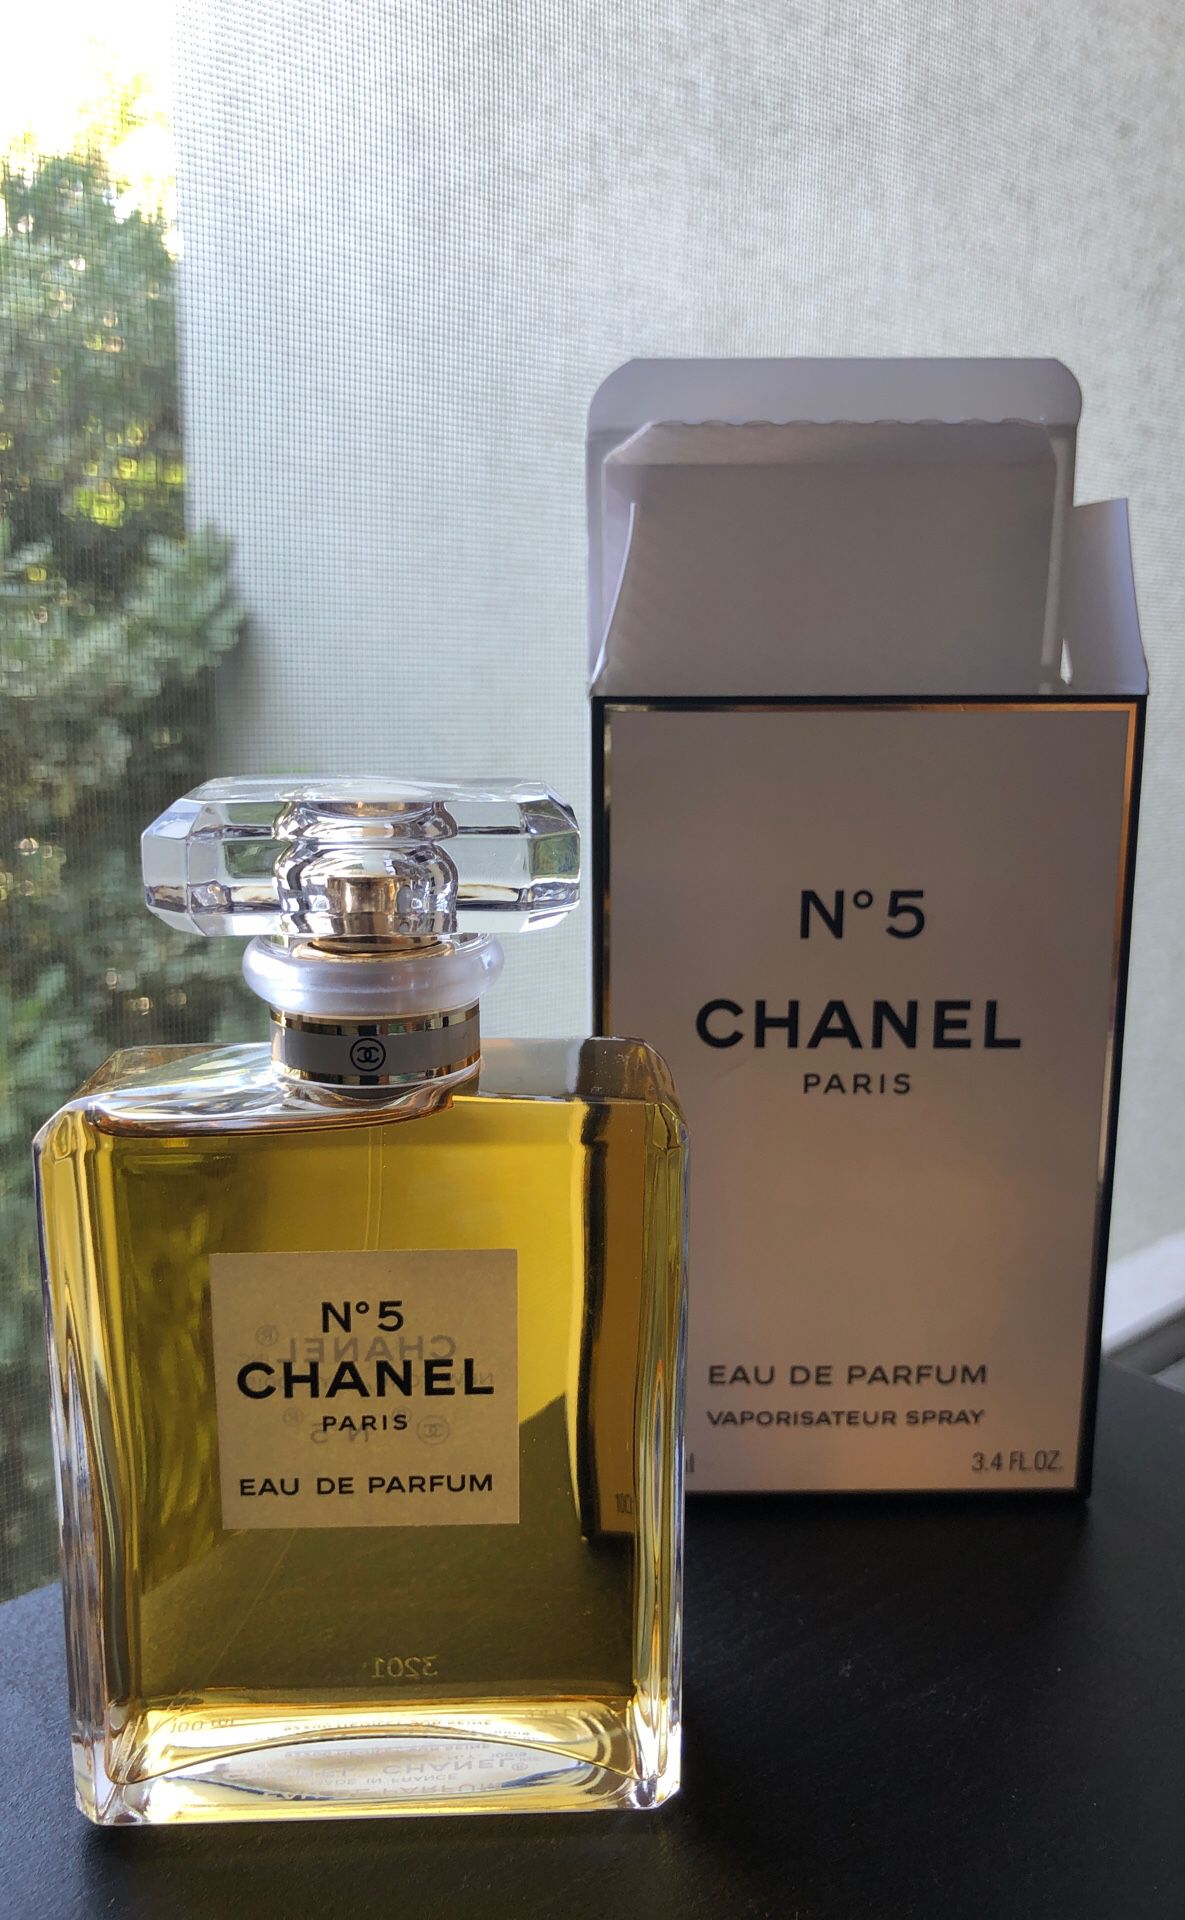 Chanel No 5 Eau De Parfum